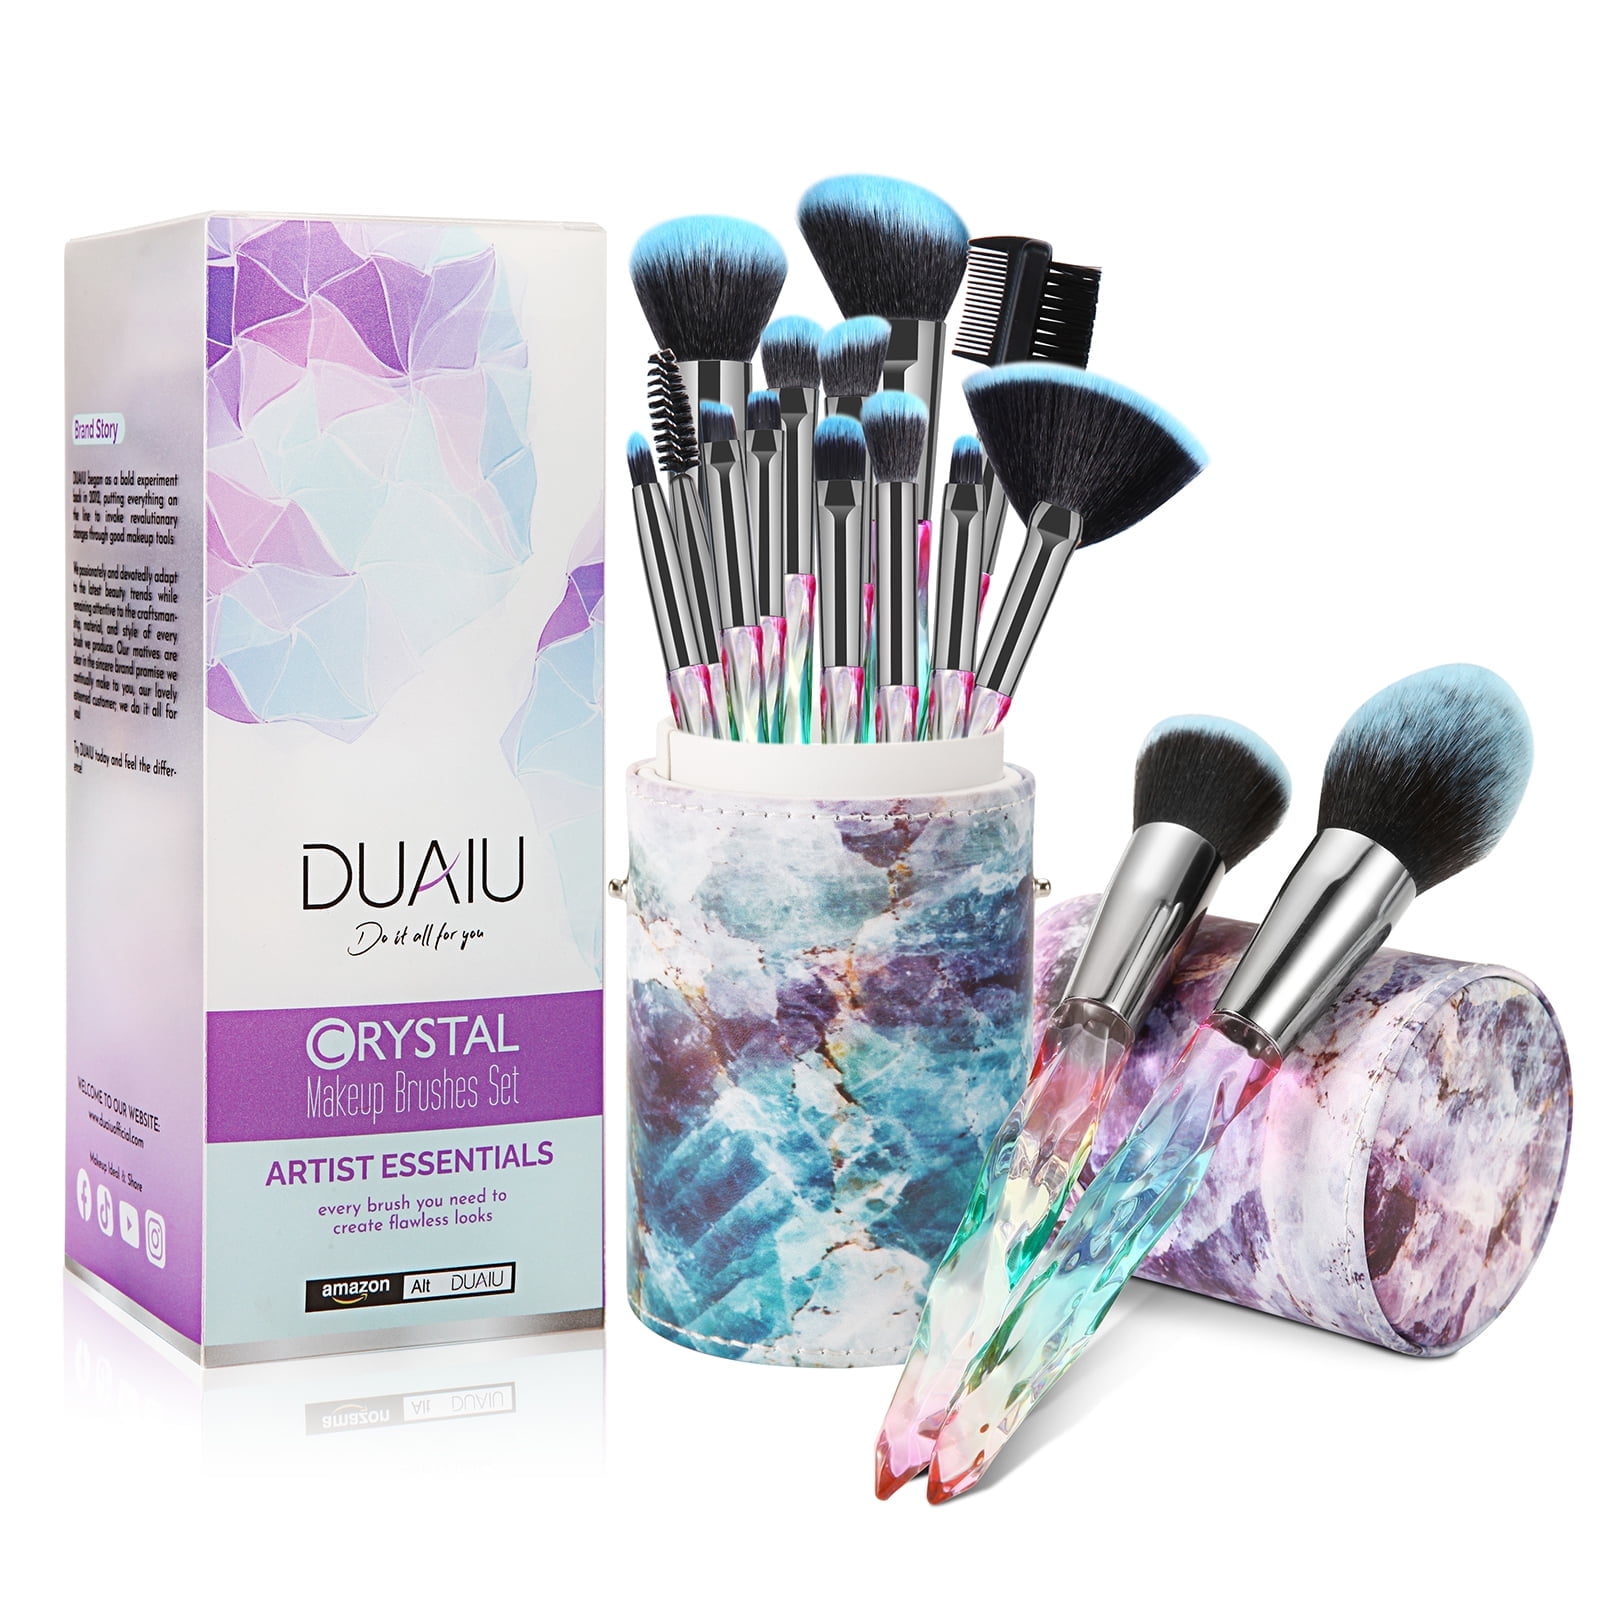 DUAIU Makeup Brushes 15PCS Marble Makeup Brush Set Blush Foundation  Concealer Eyeshadow Brushes with 4 Makeup Sponge - Valentine's Day, Xmas  Gift 